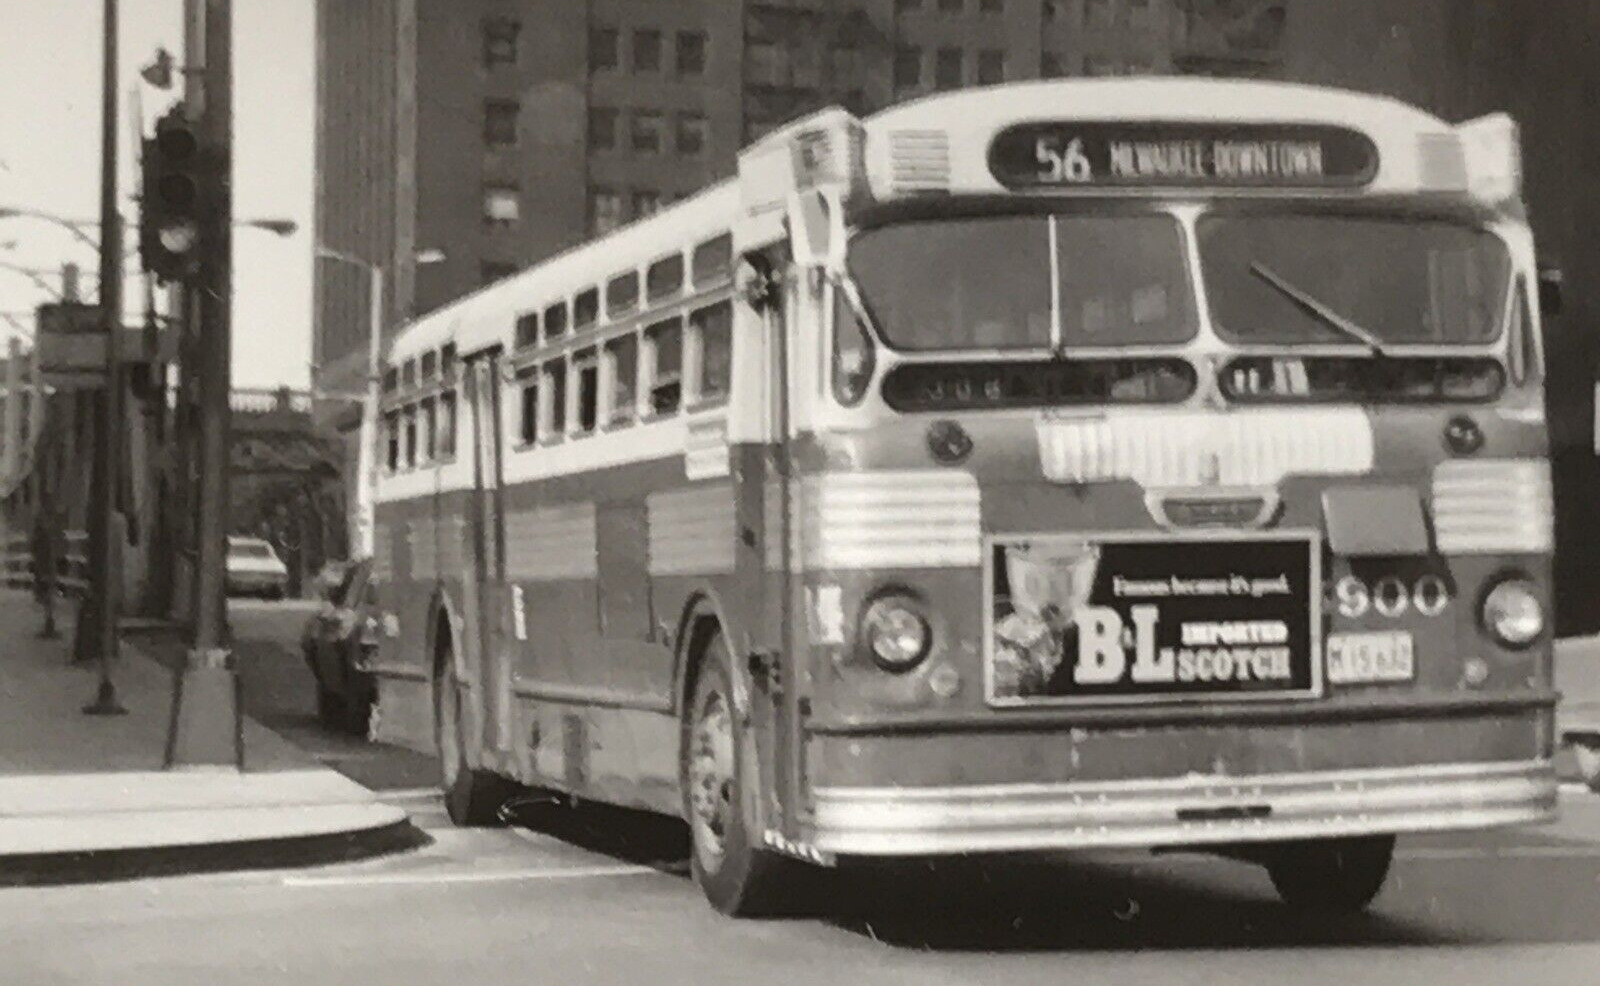 Chicago Transit Authority CTA Bus #5900 Route 56 Milwaukee Downtown Photo